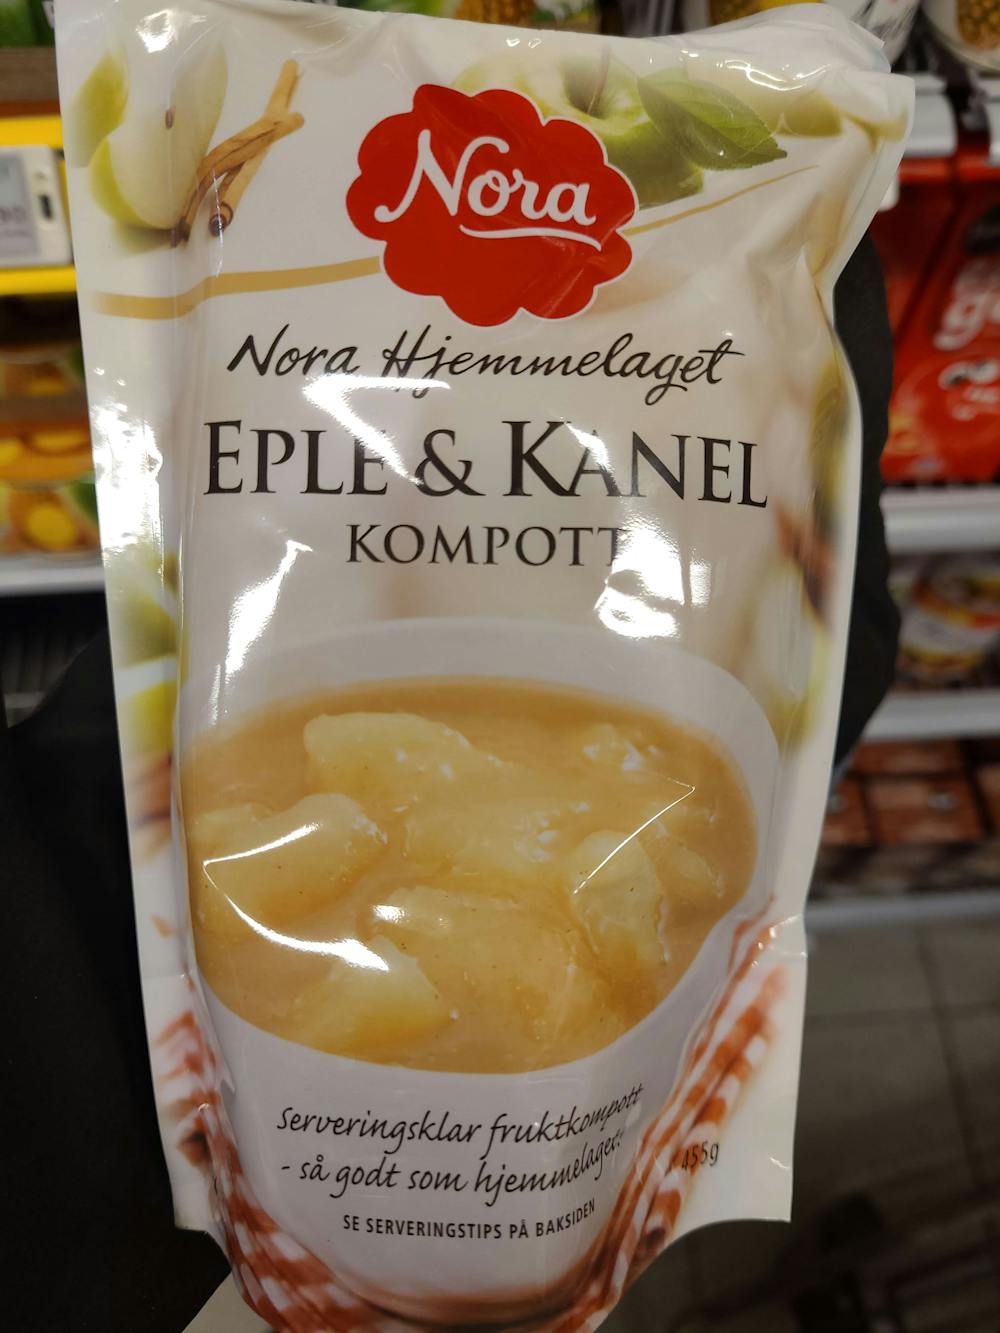 Eple & kanel kompott, Nora